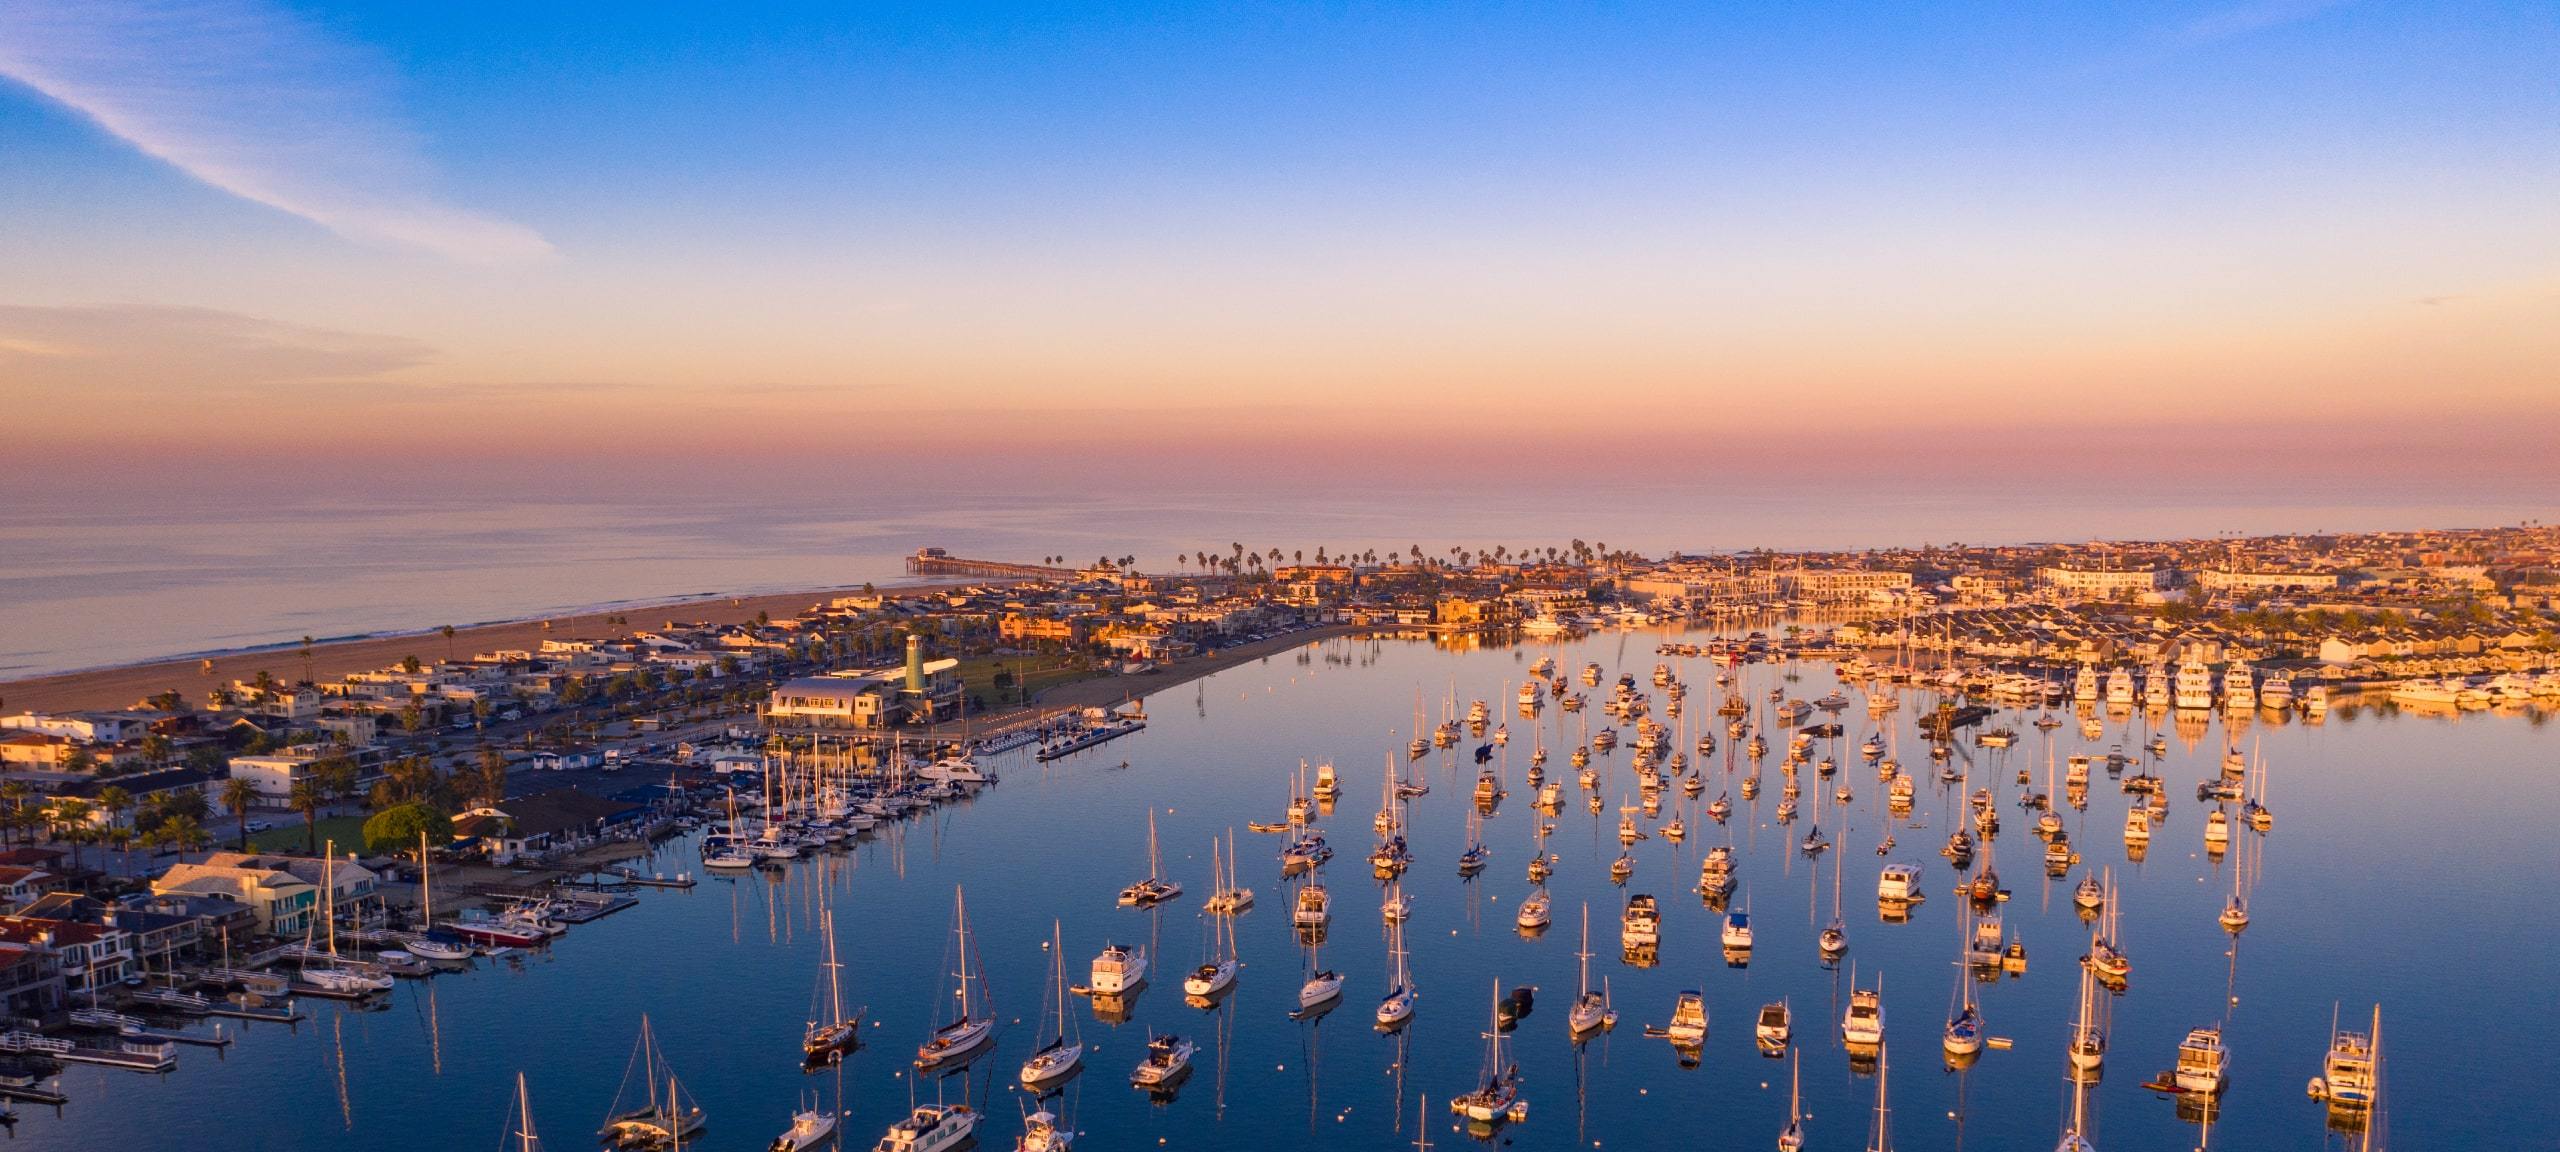 Aerial view of sunset at Newport Beach harbor